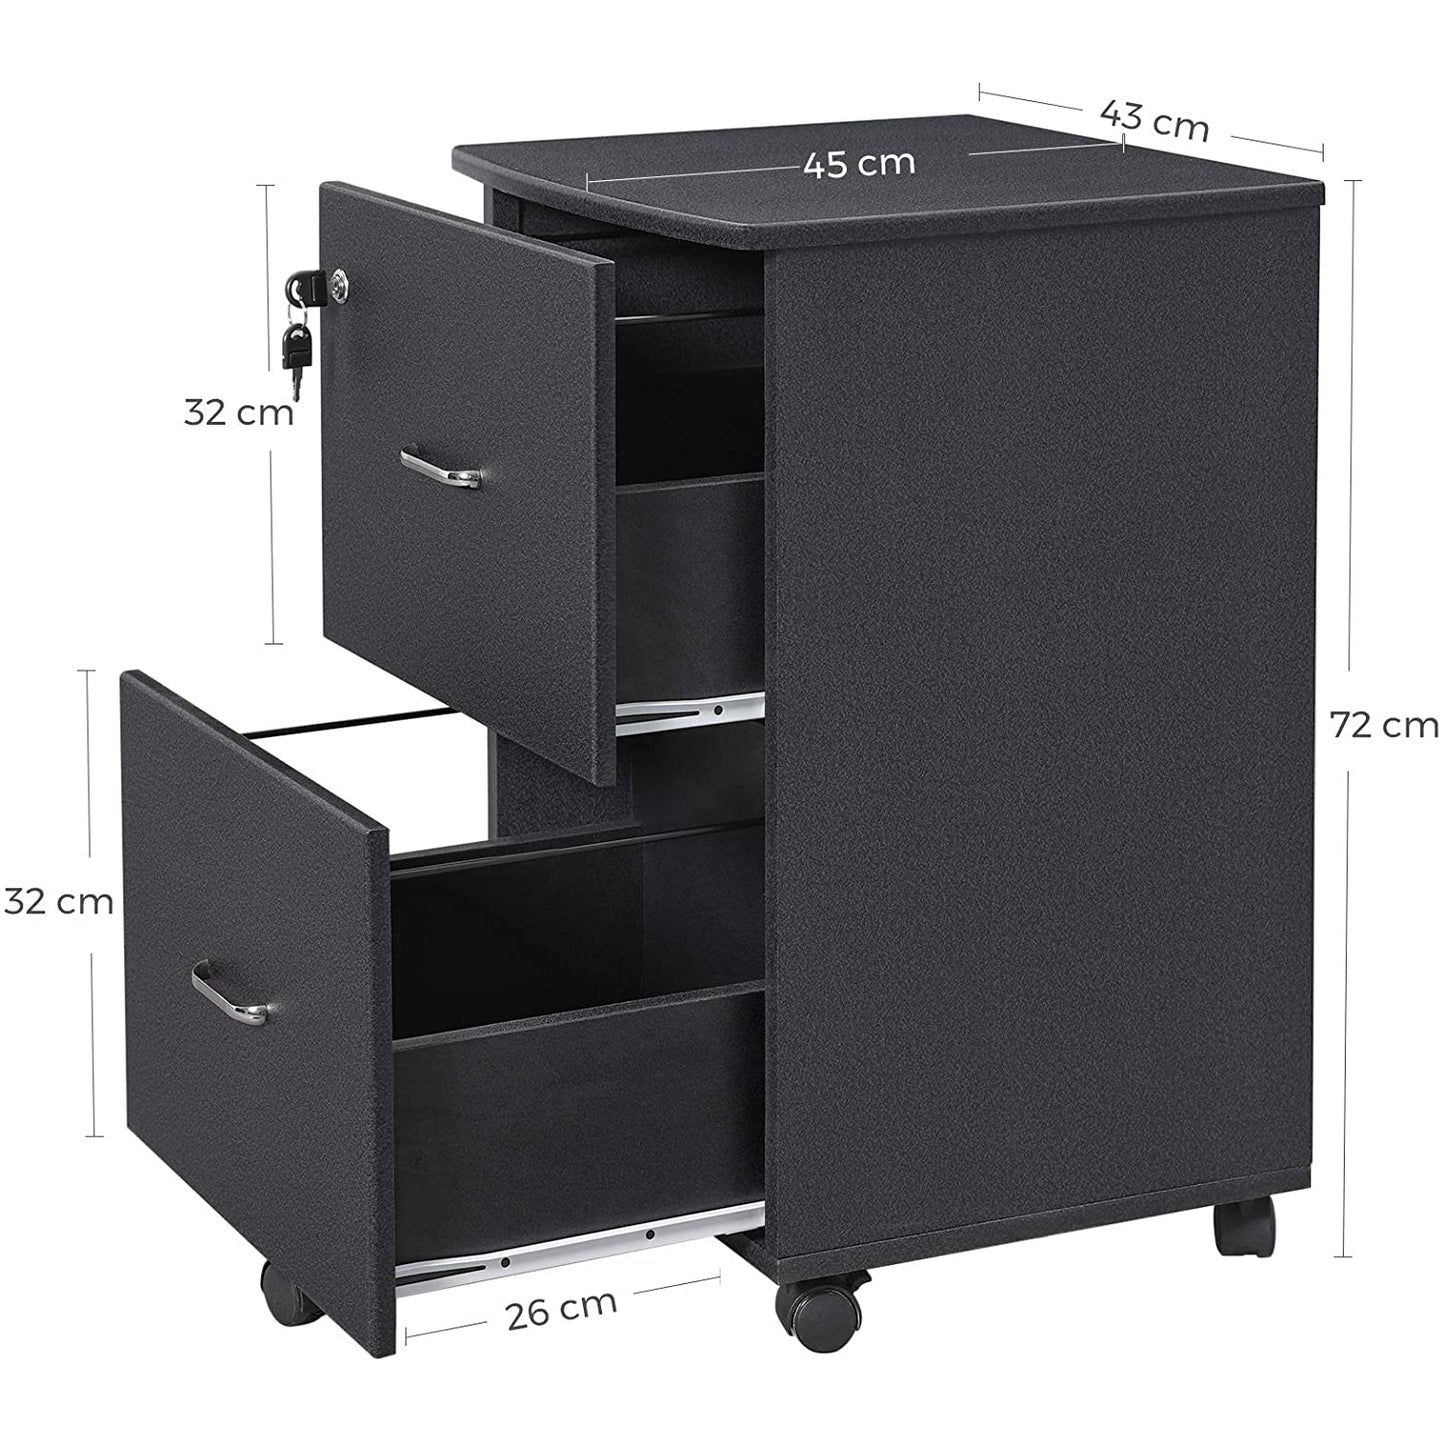 Nancy's Drawer Unit Black - Steel Locker on Wheels - Office Cabinet - Rolling Container - 71 x 51 x 16 cm